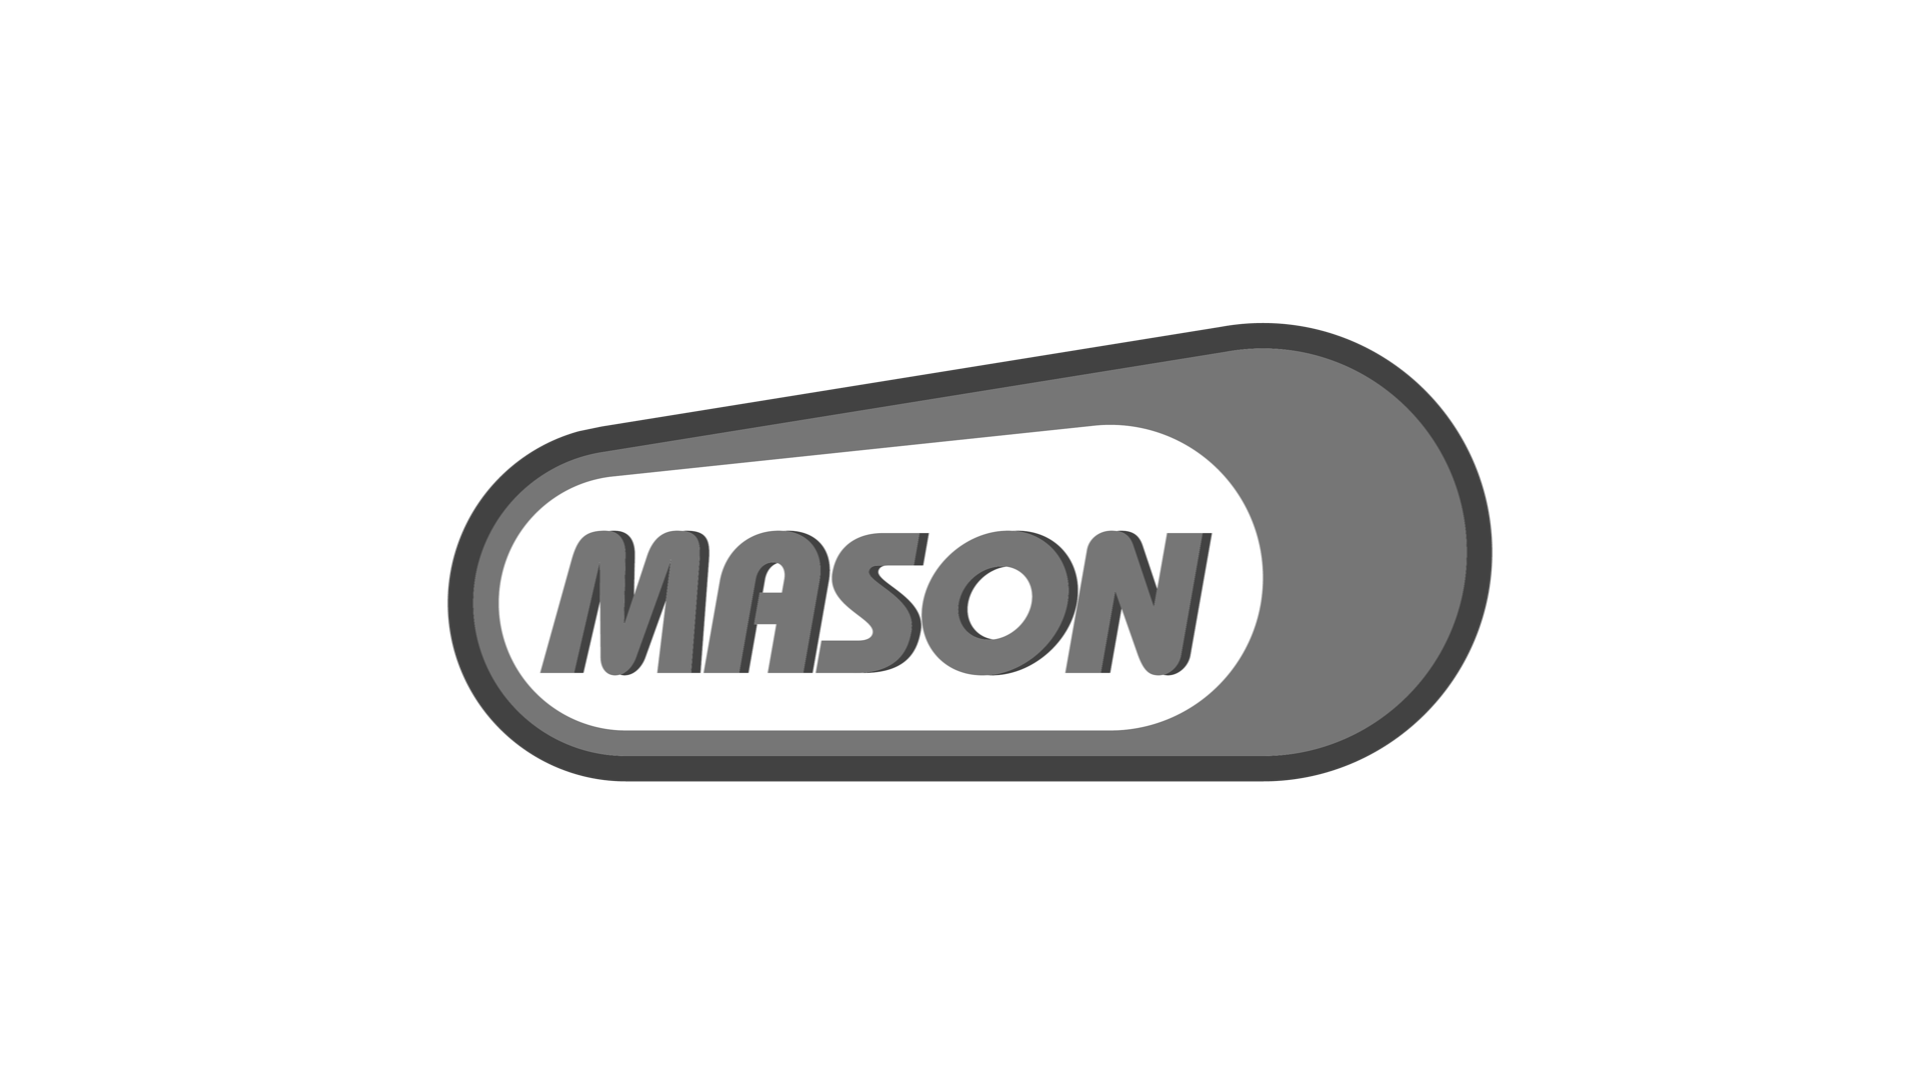 Mason